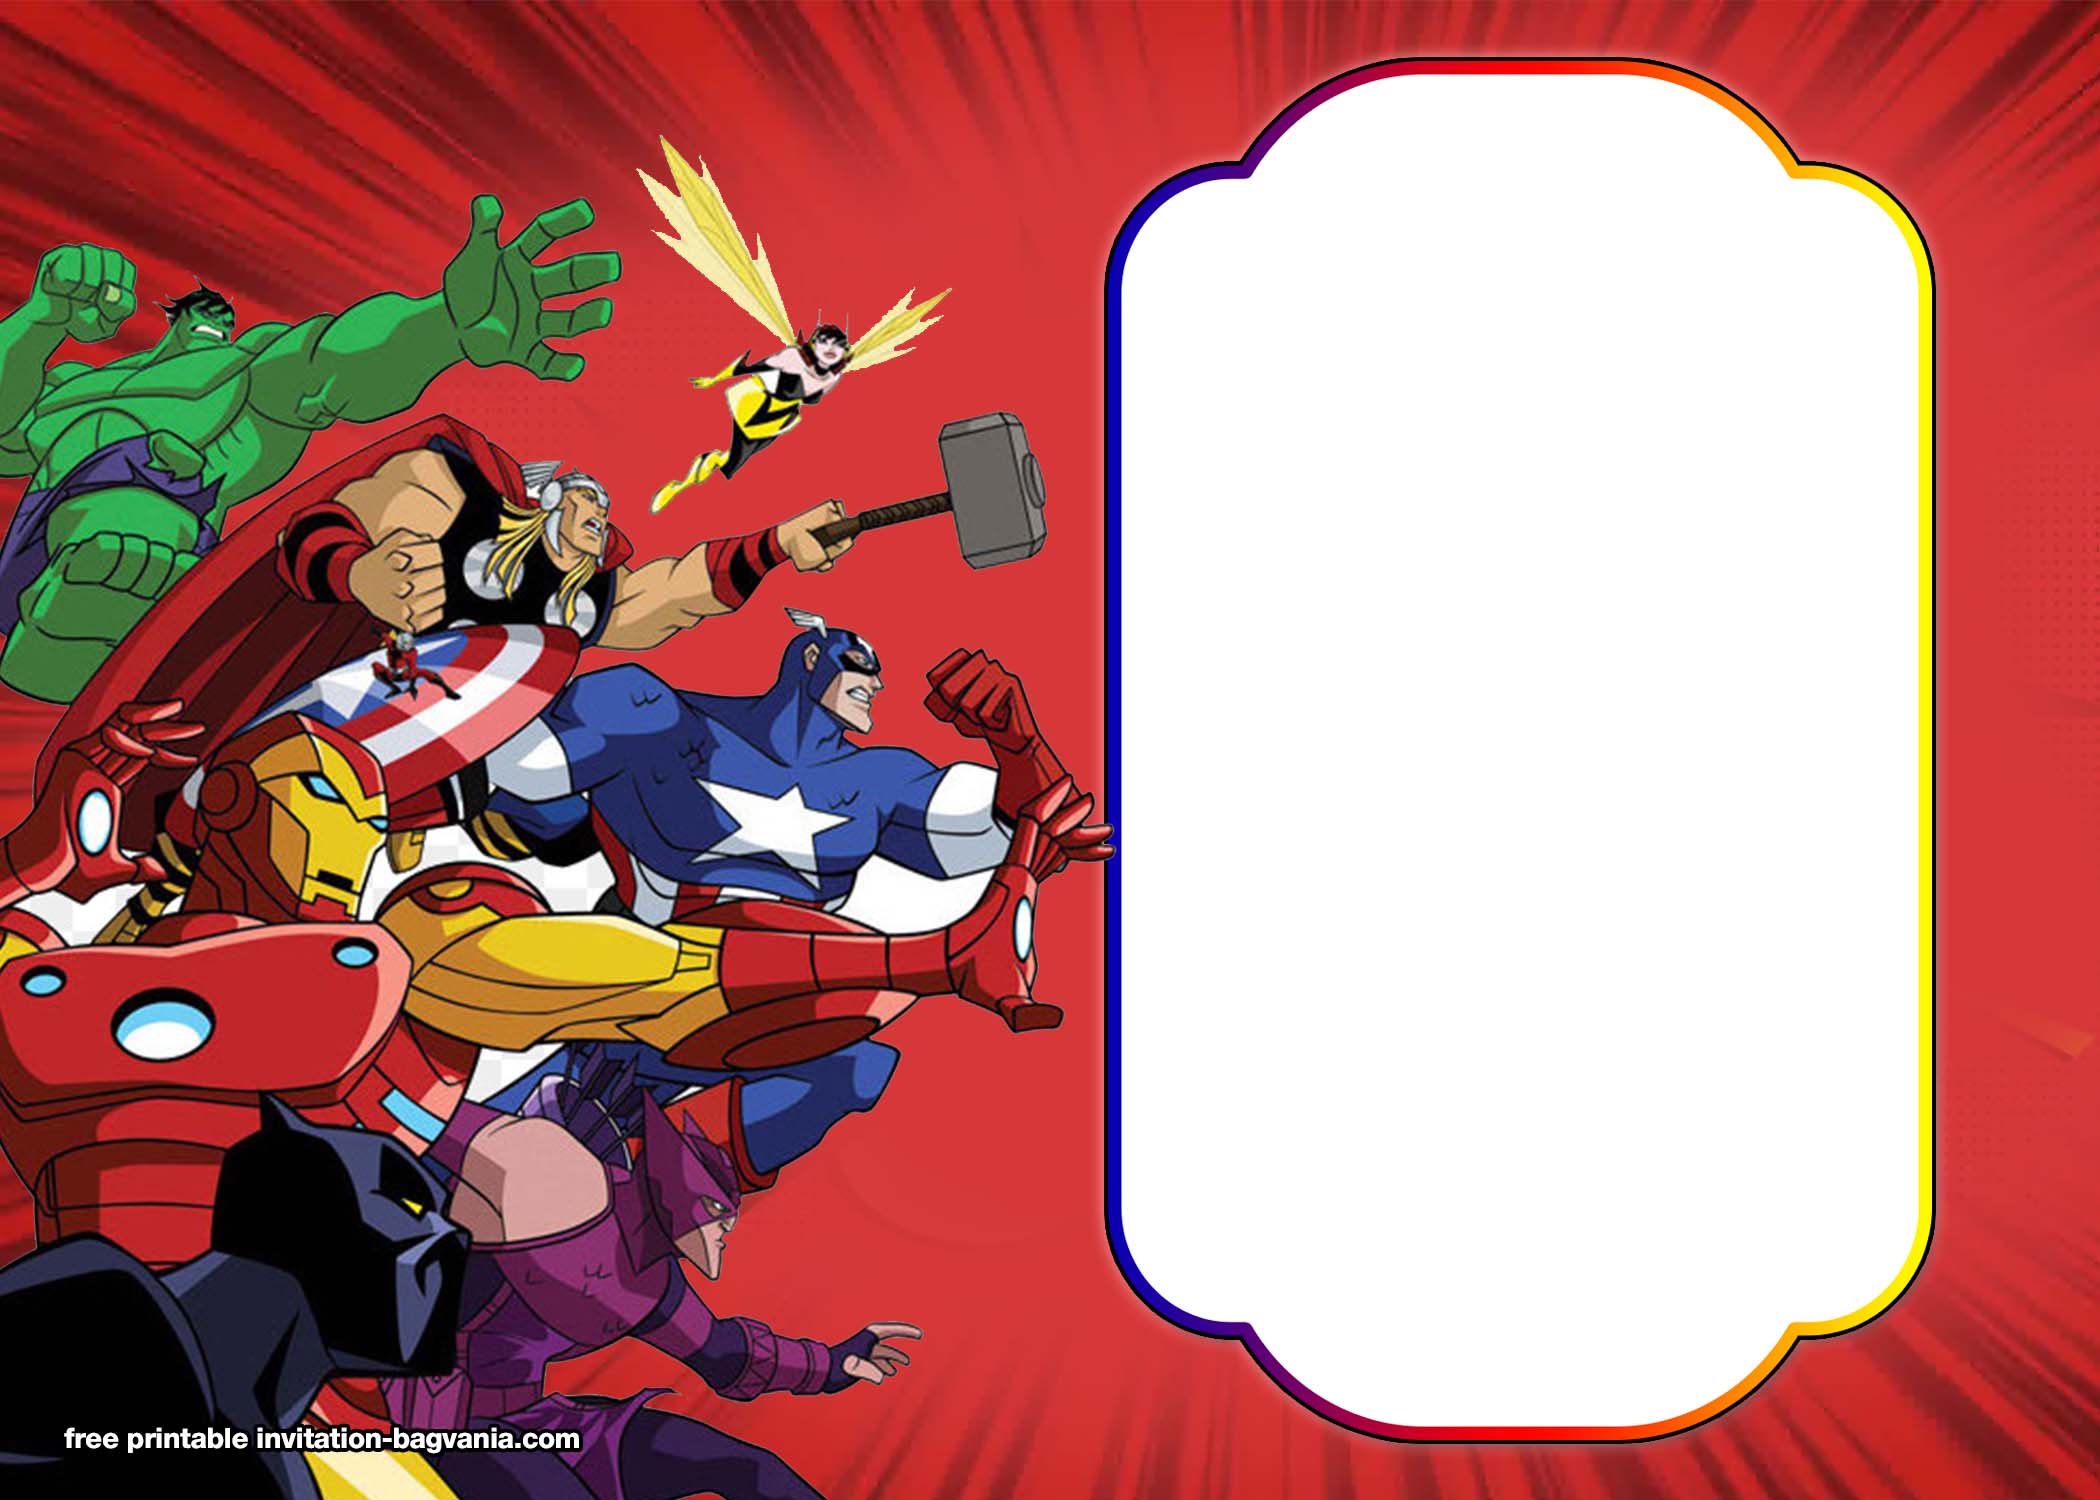 free-avengers-endgame-birthday-invitation-templates-free-printable